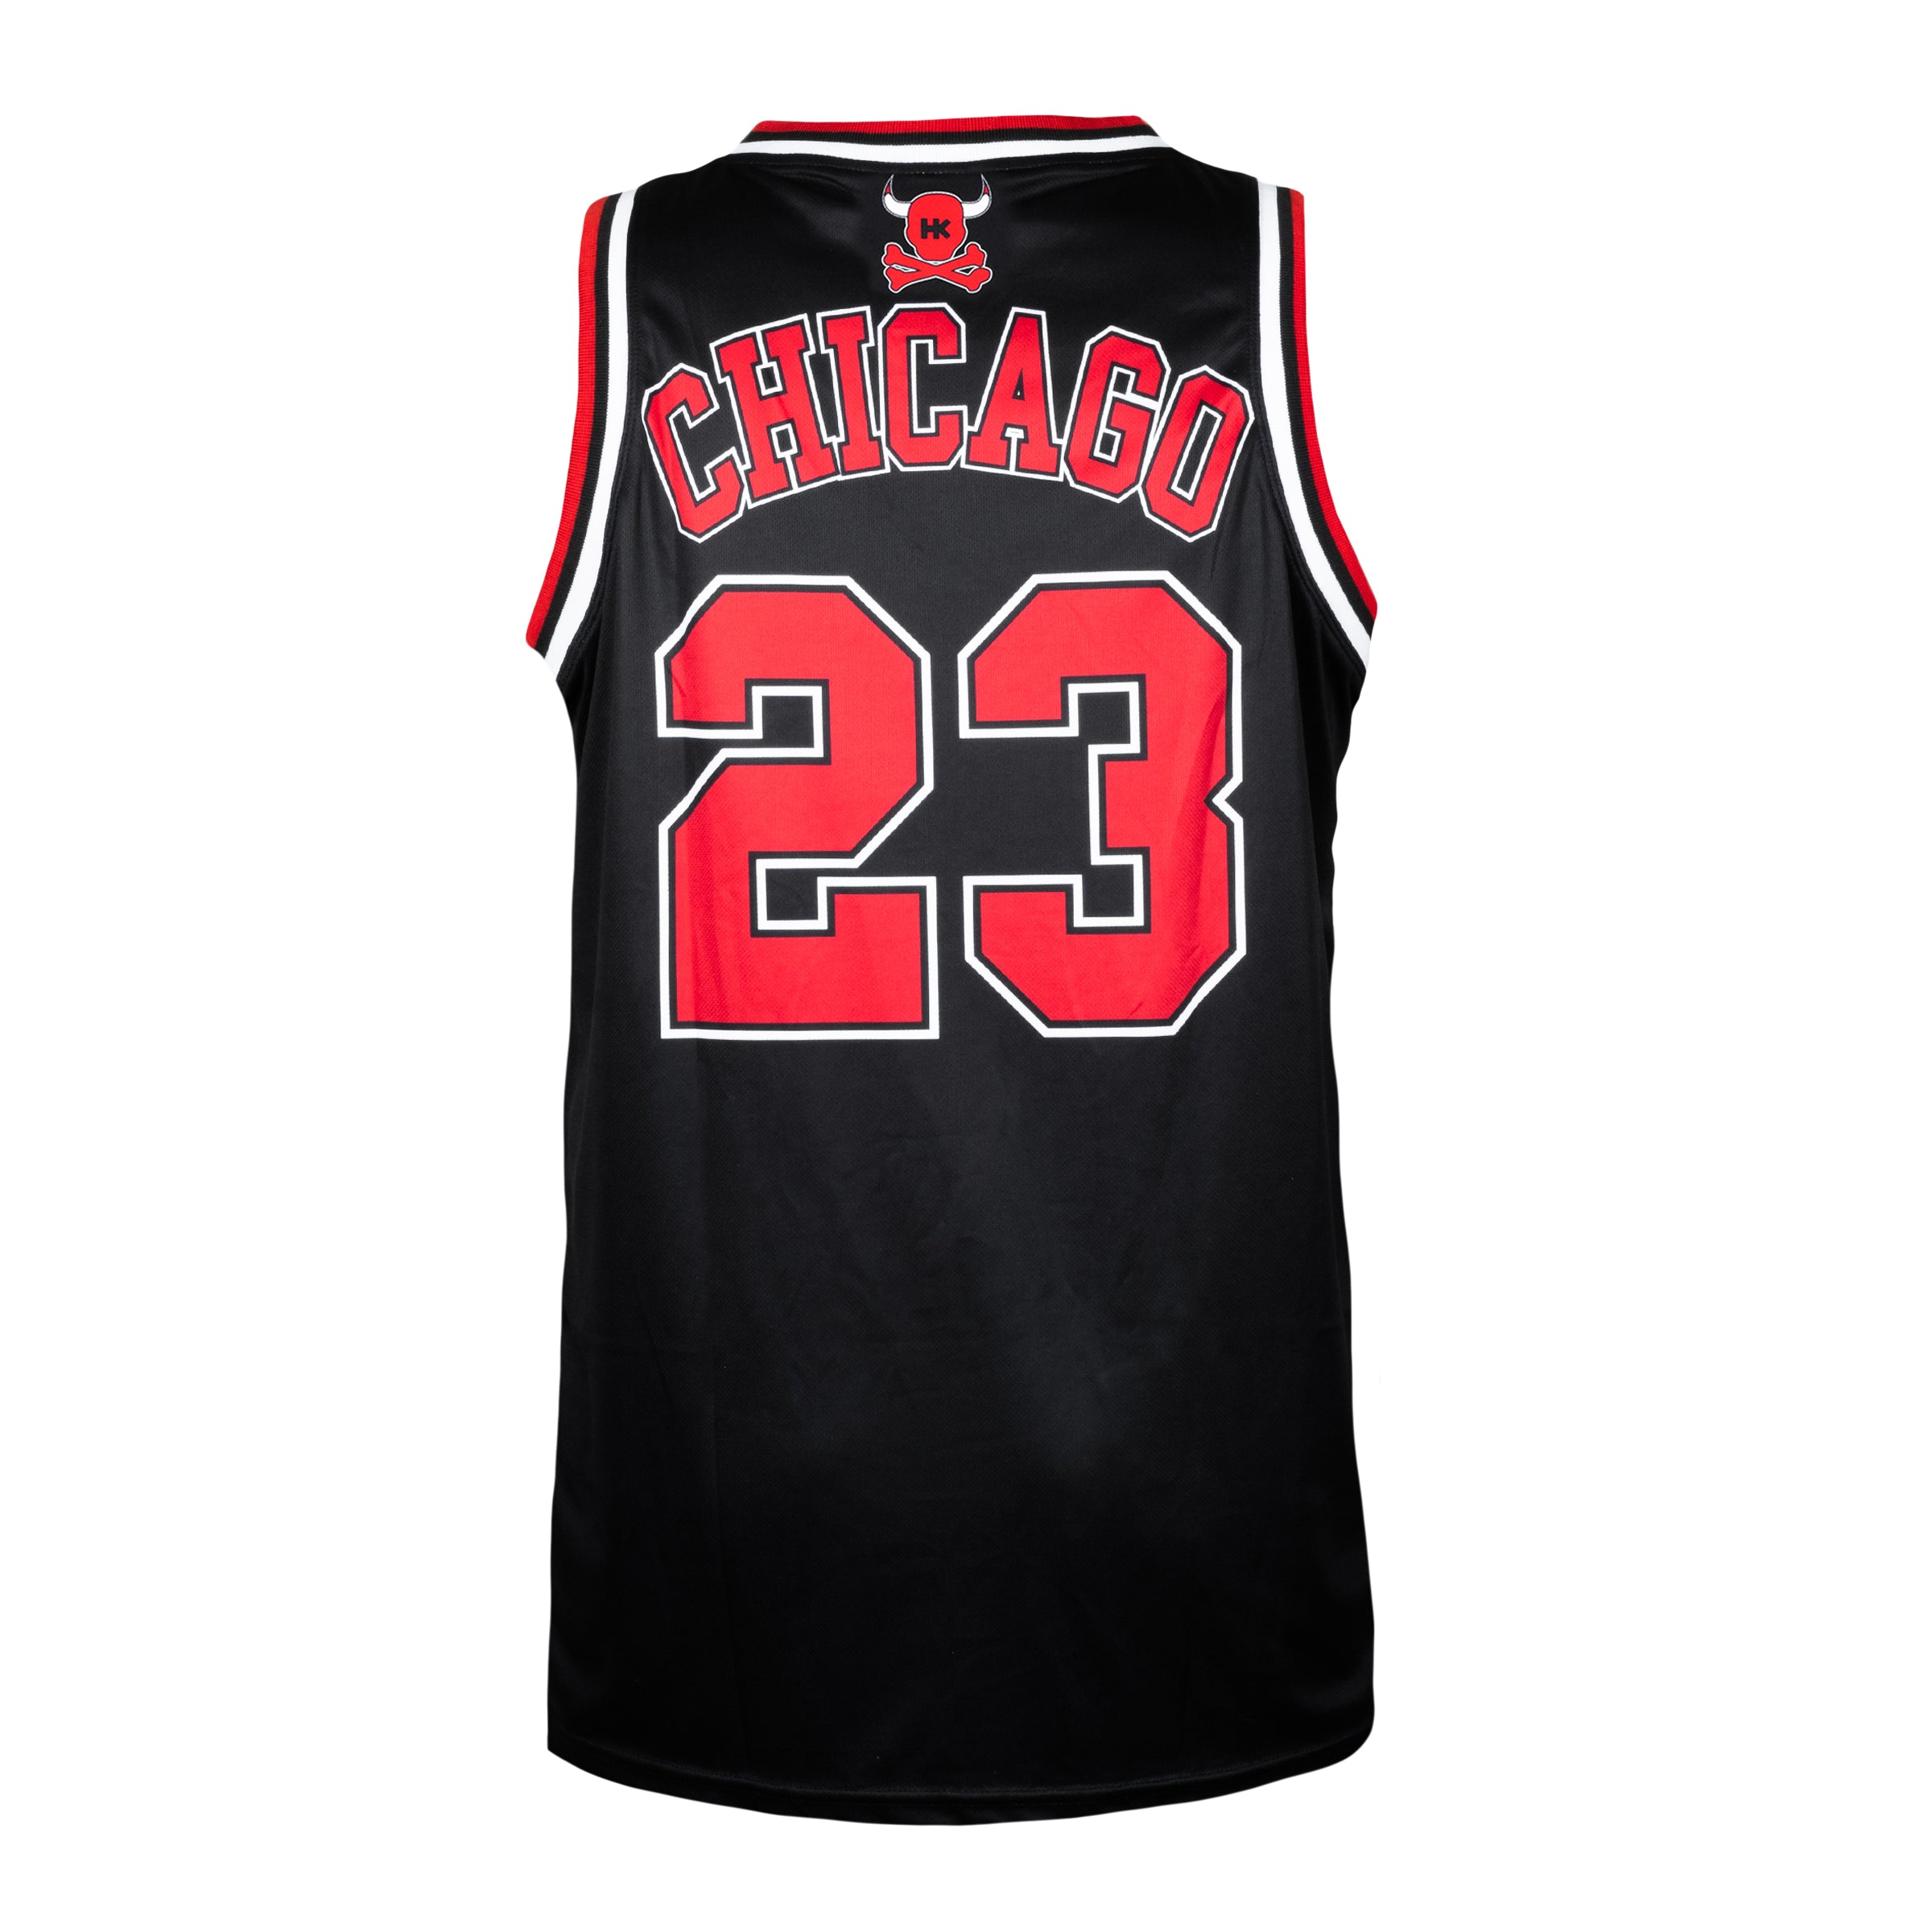 CHICAGO SKYHAWKS Black Green Grey and White Basketball Uniforms